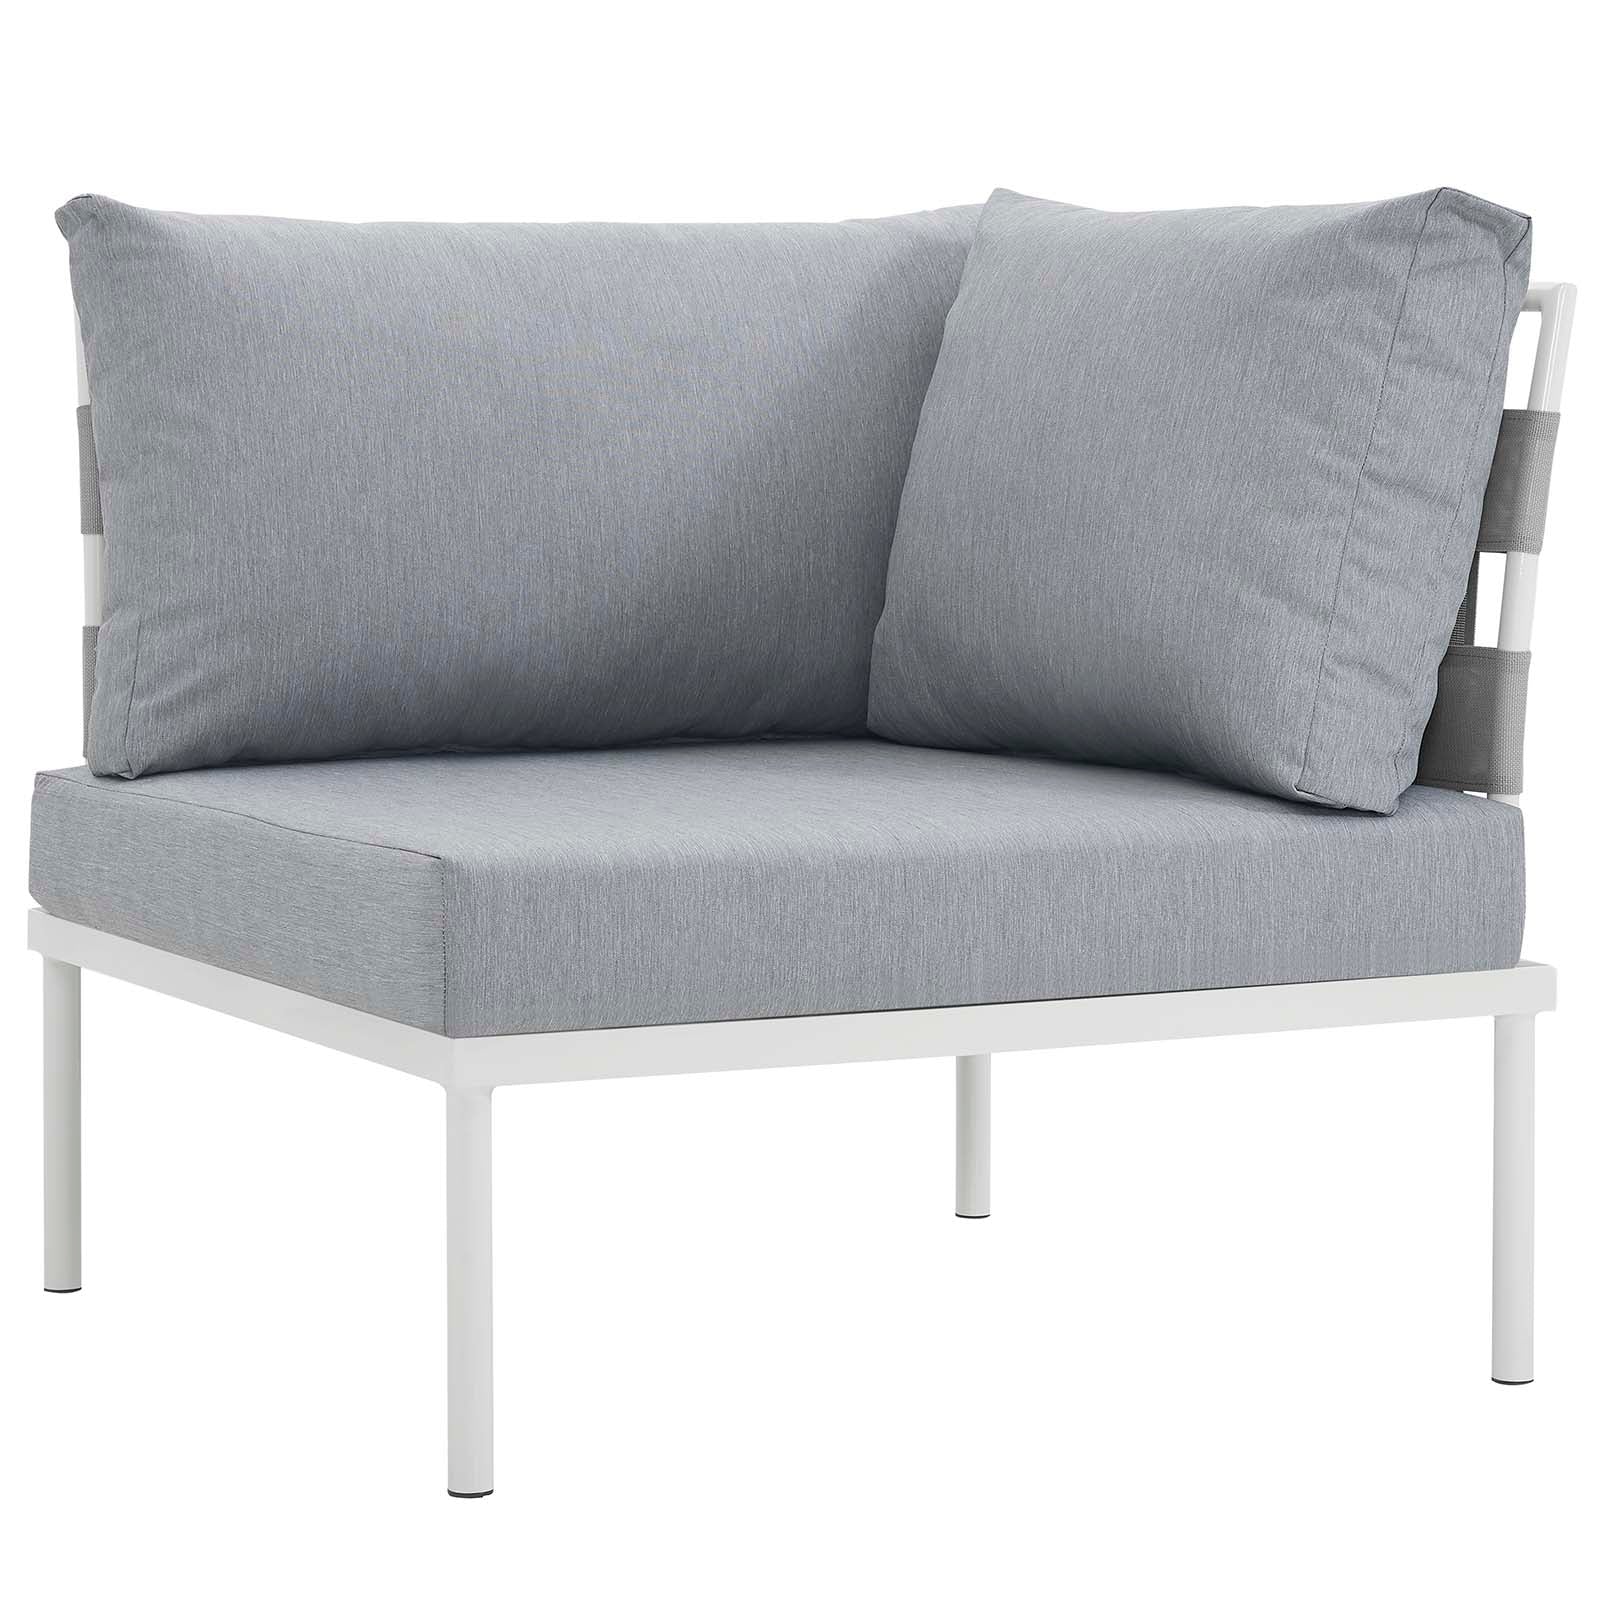 Modway Outdoor Conversation Sets - Harmony 68" 5 Piece Outdoor Patio Aluminum Sectional Sofa Set White Gray